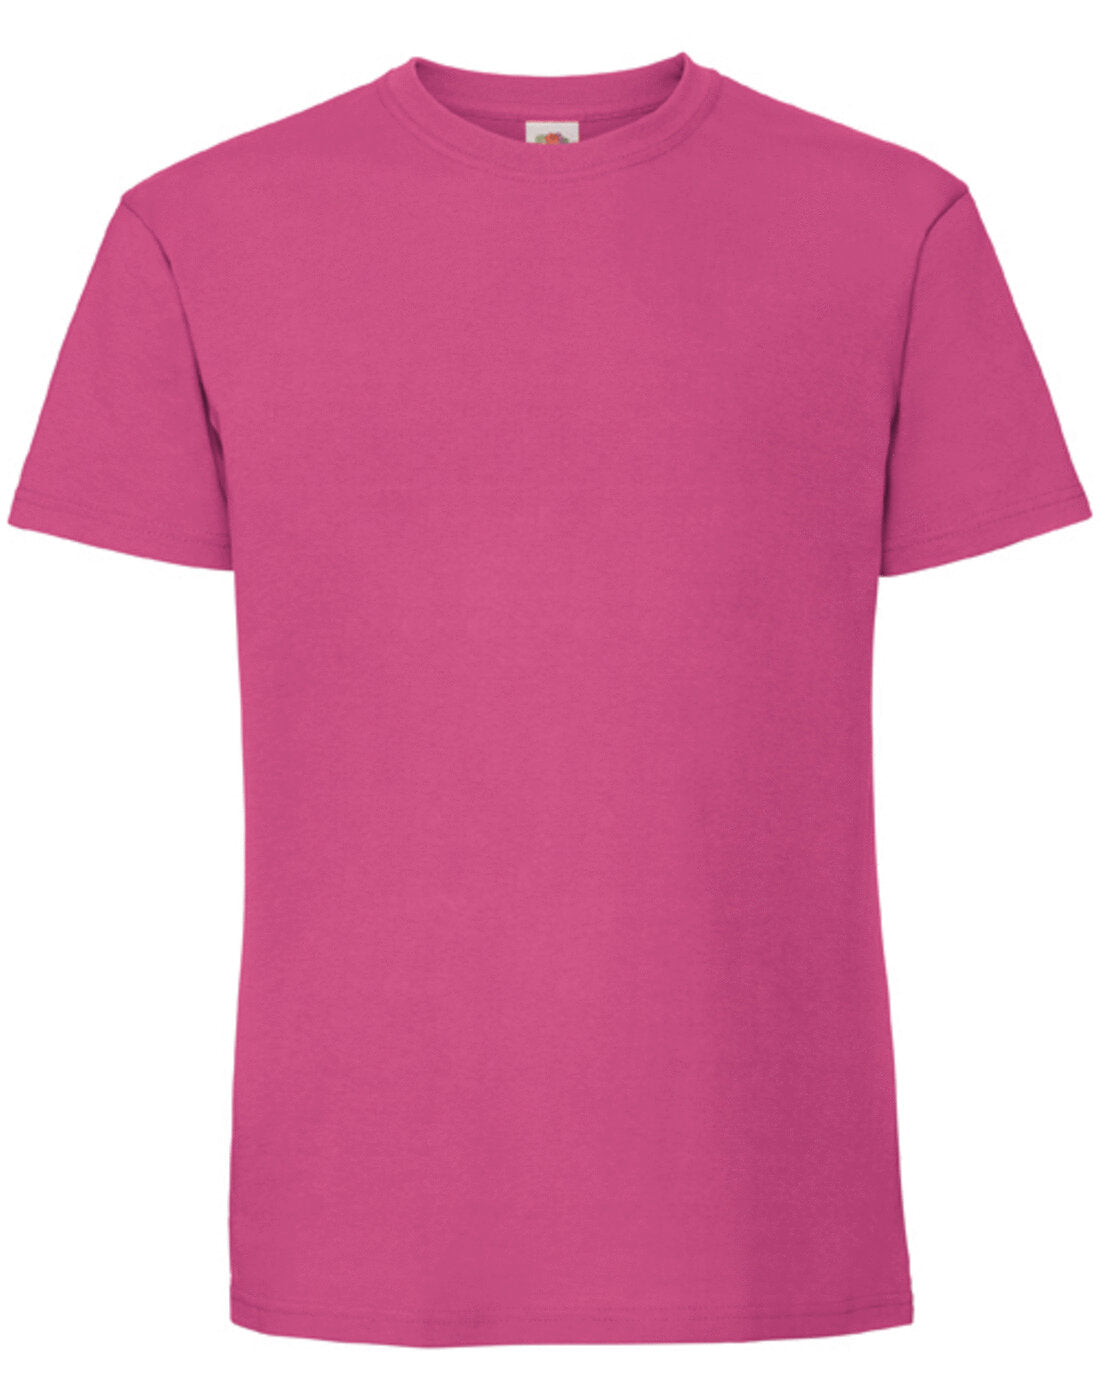 Fruit of the Loom Mens Ringspun Premium T-Shirt - Fuchsia Pink